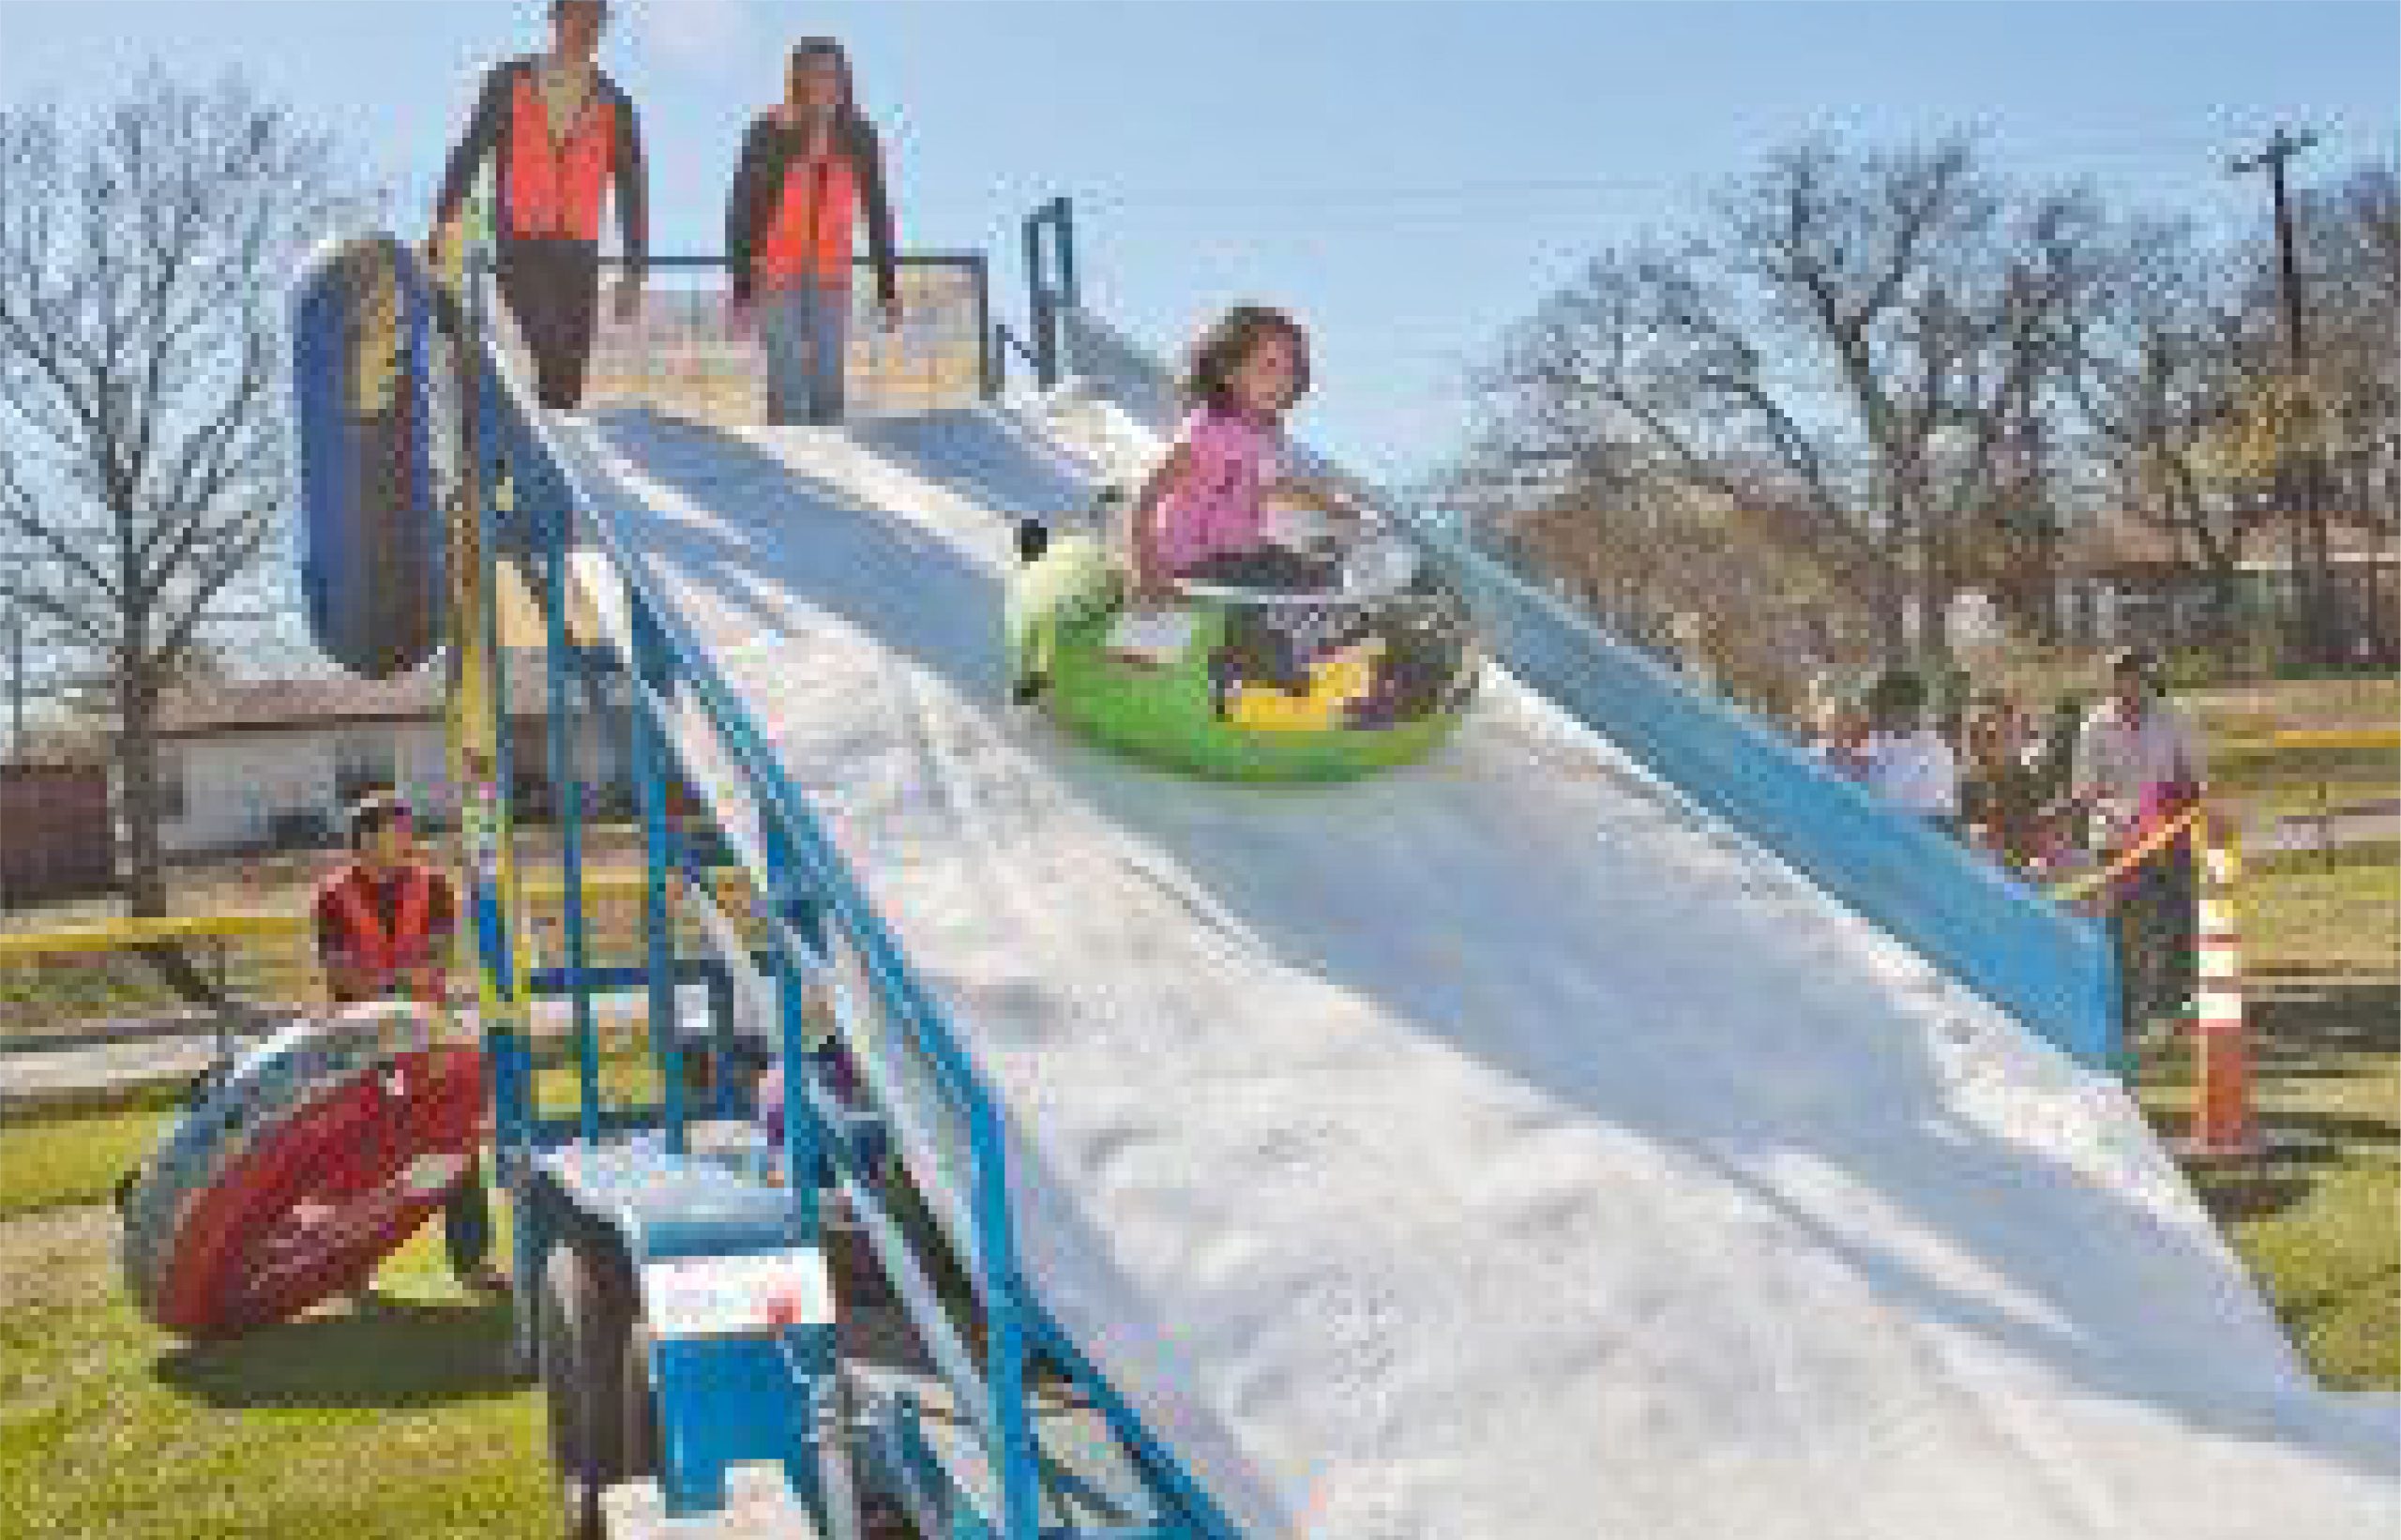 Children Playing on Slide